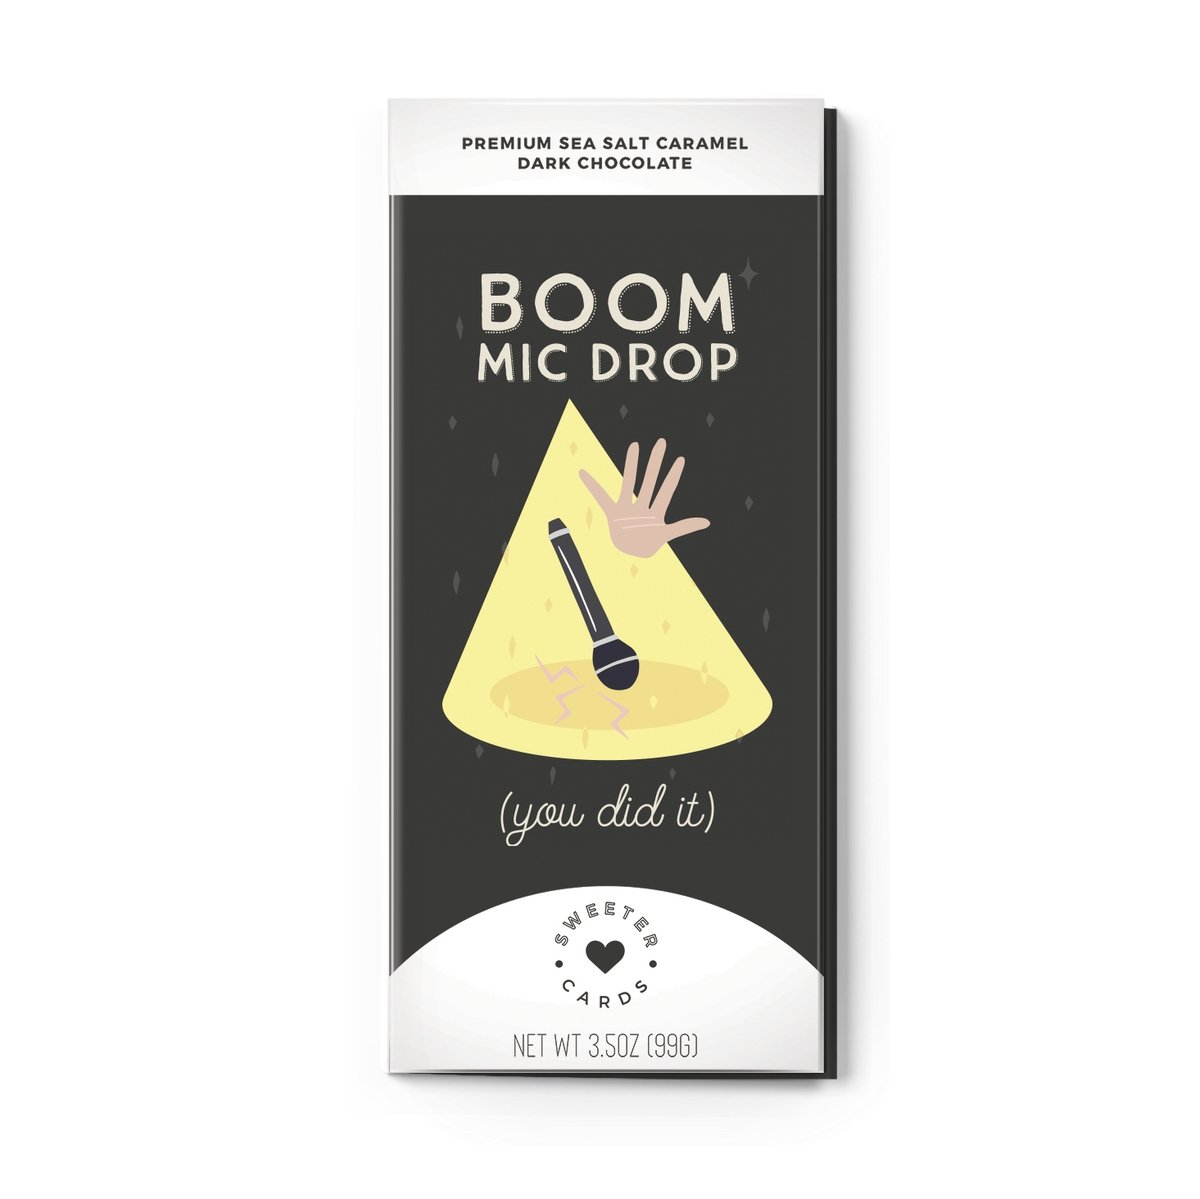 Sweeter Cards - 'Boom Mic Drop (You Did It)' Sea Salt Caramel Dark Chocolate Bar (3.5OZ) - The Epicurean Trader